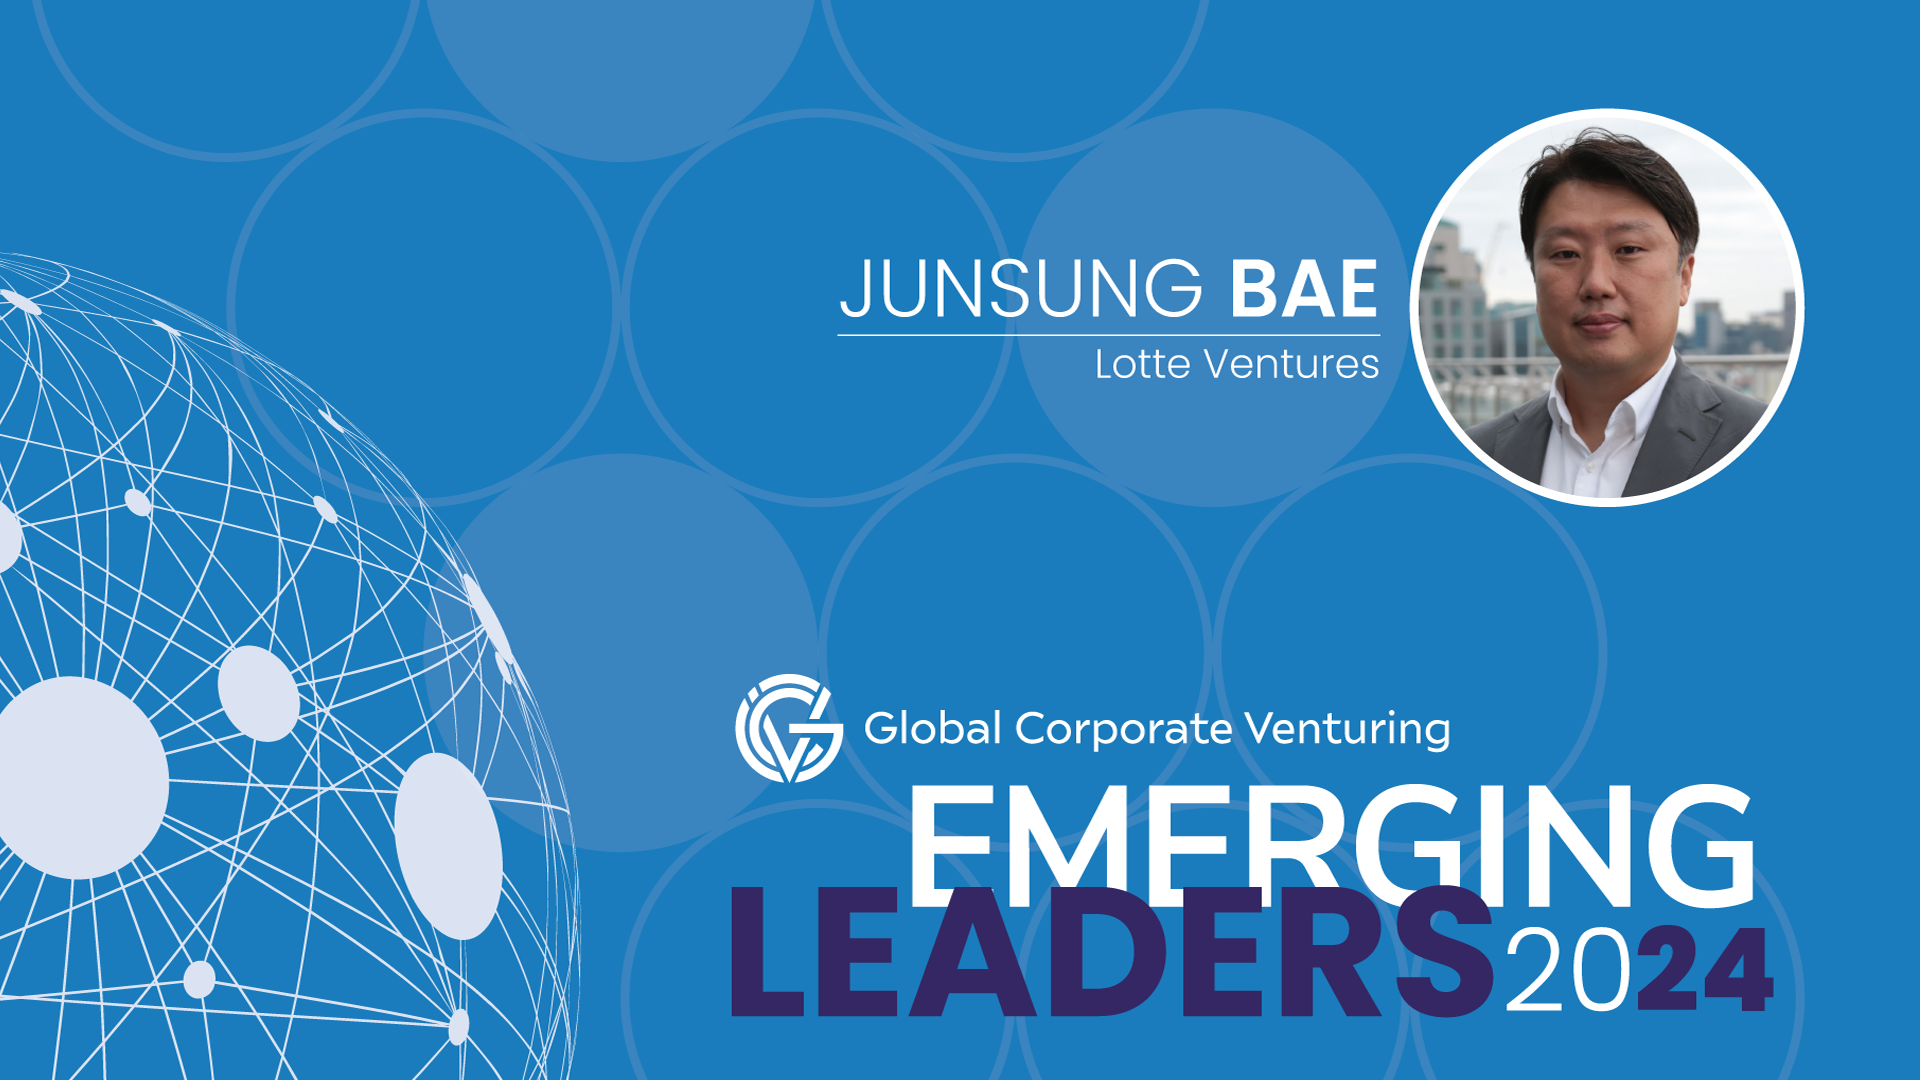 JunSung Bae, executive director, Lotte Ventures